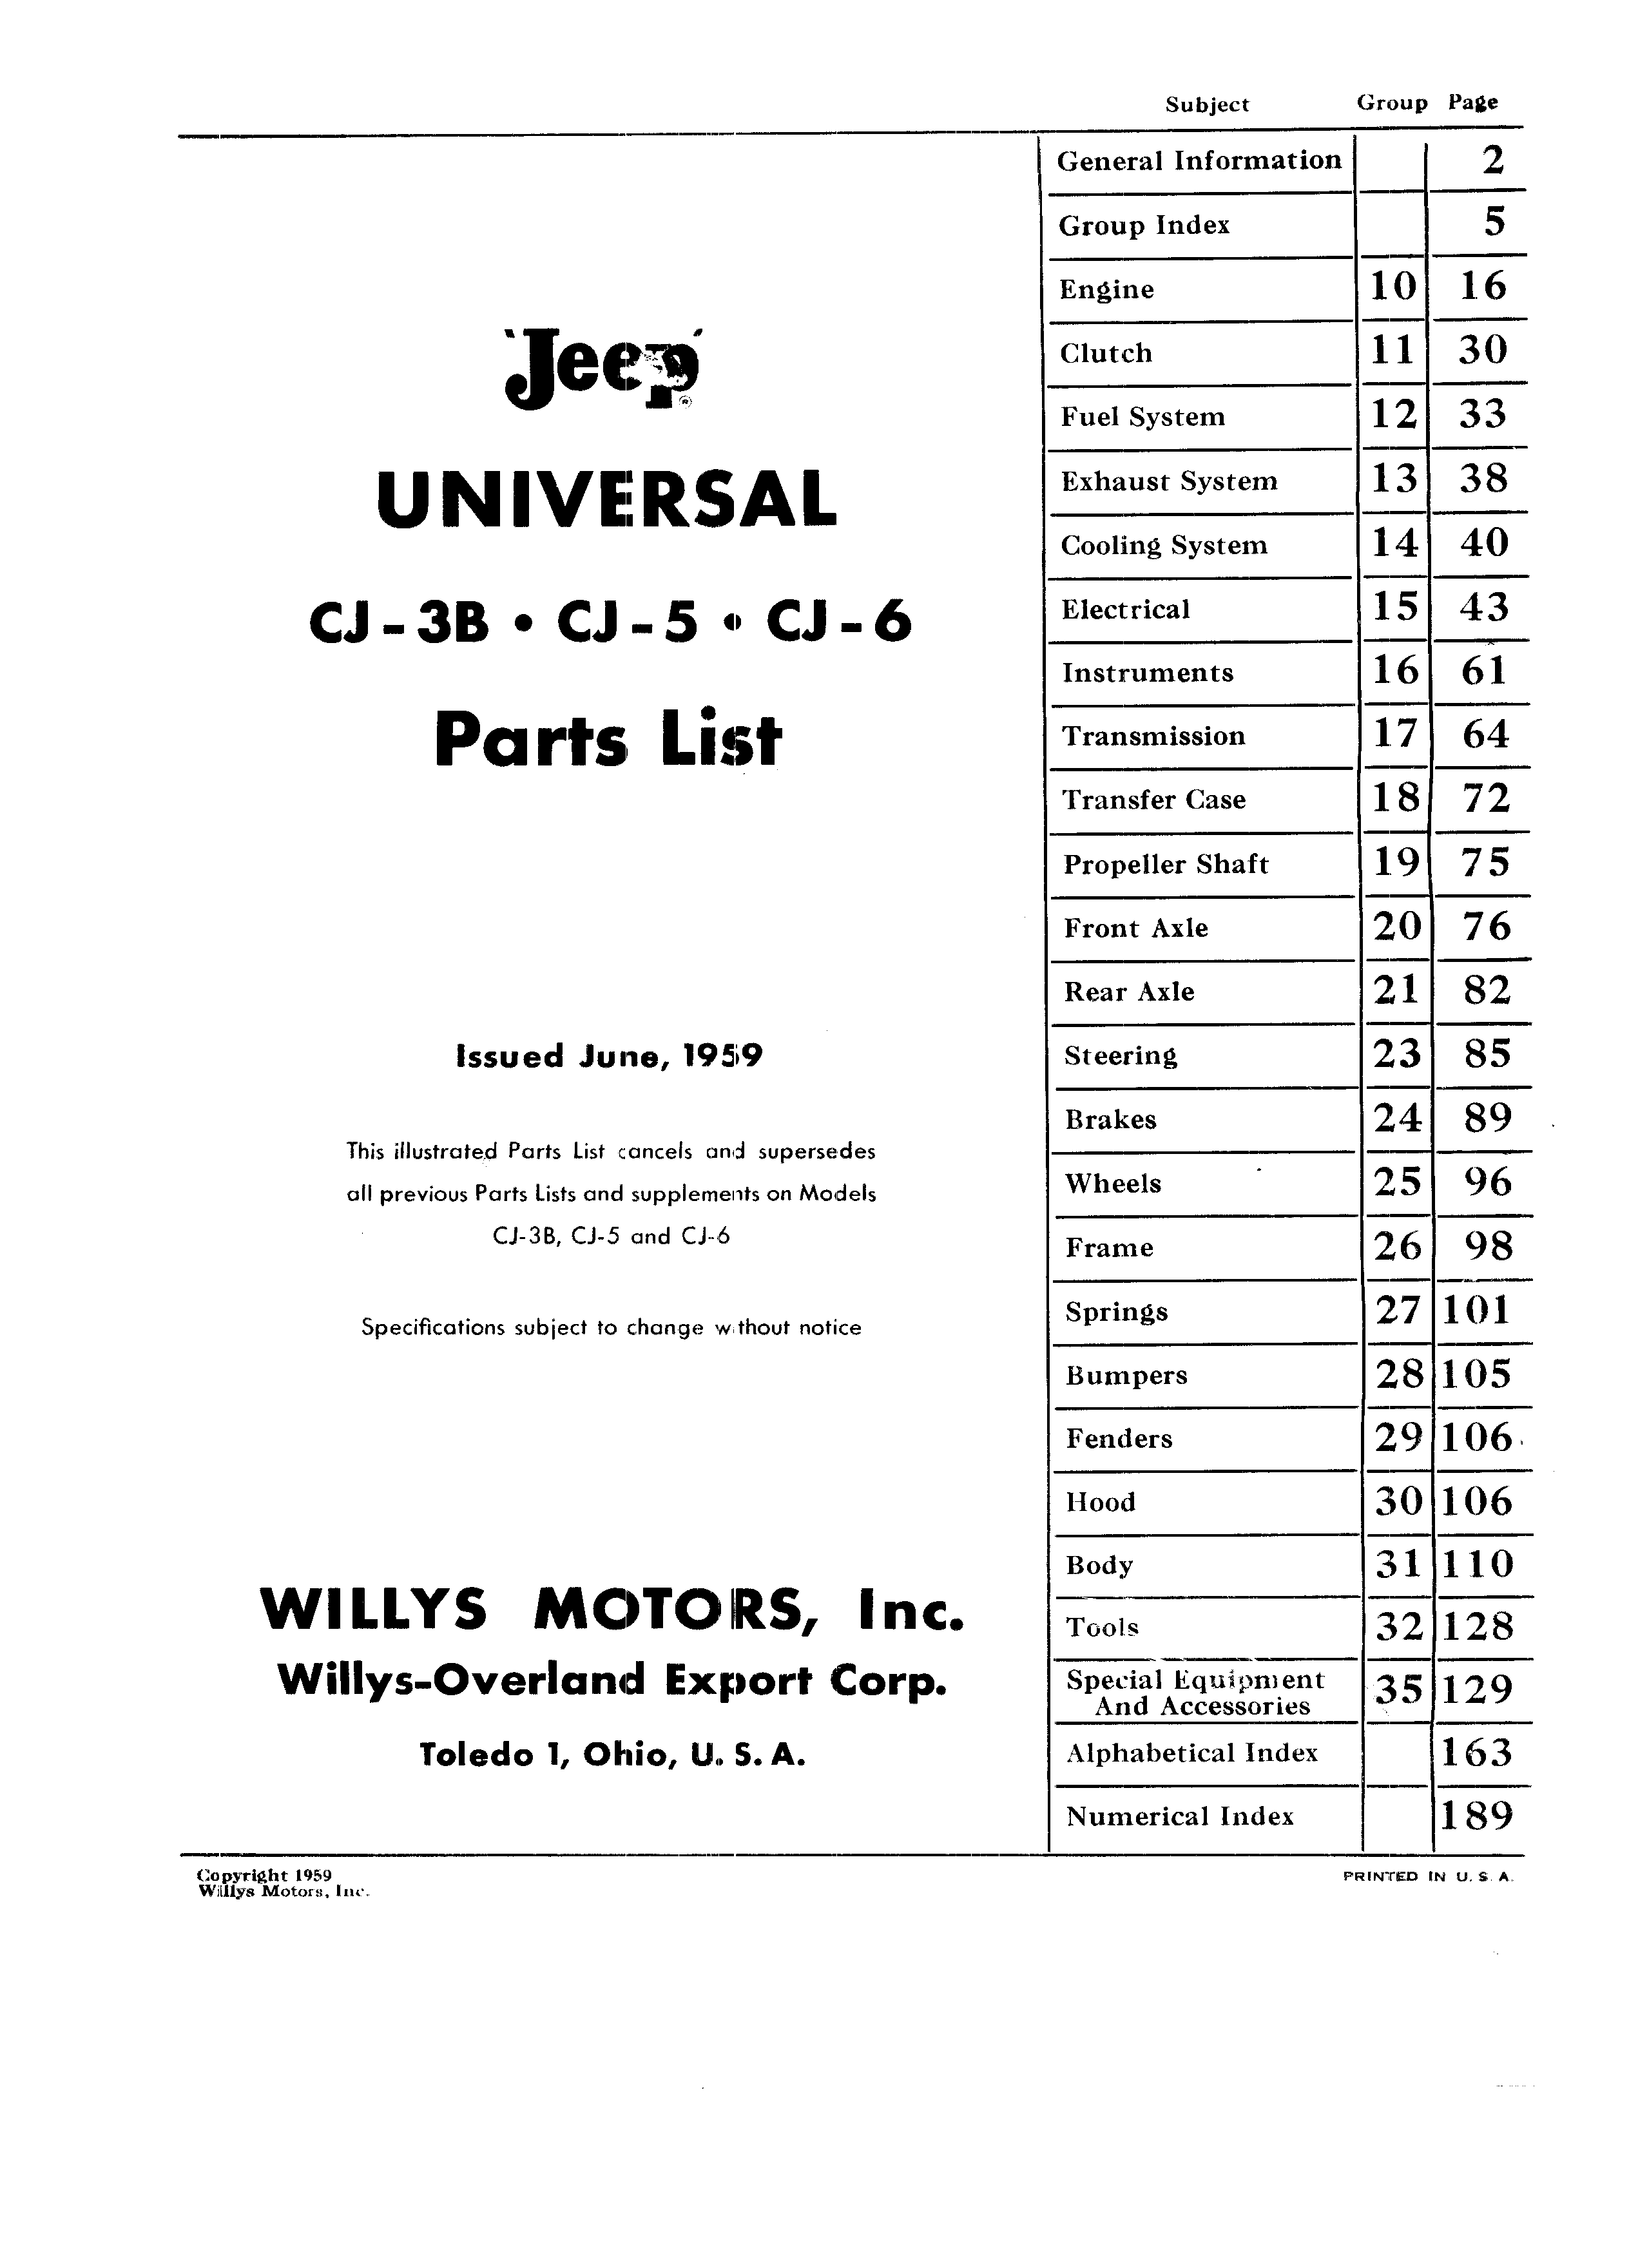 Jeep Universal Parts List June 1959